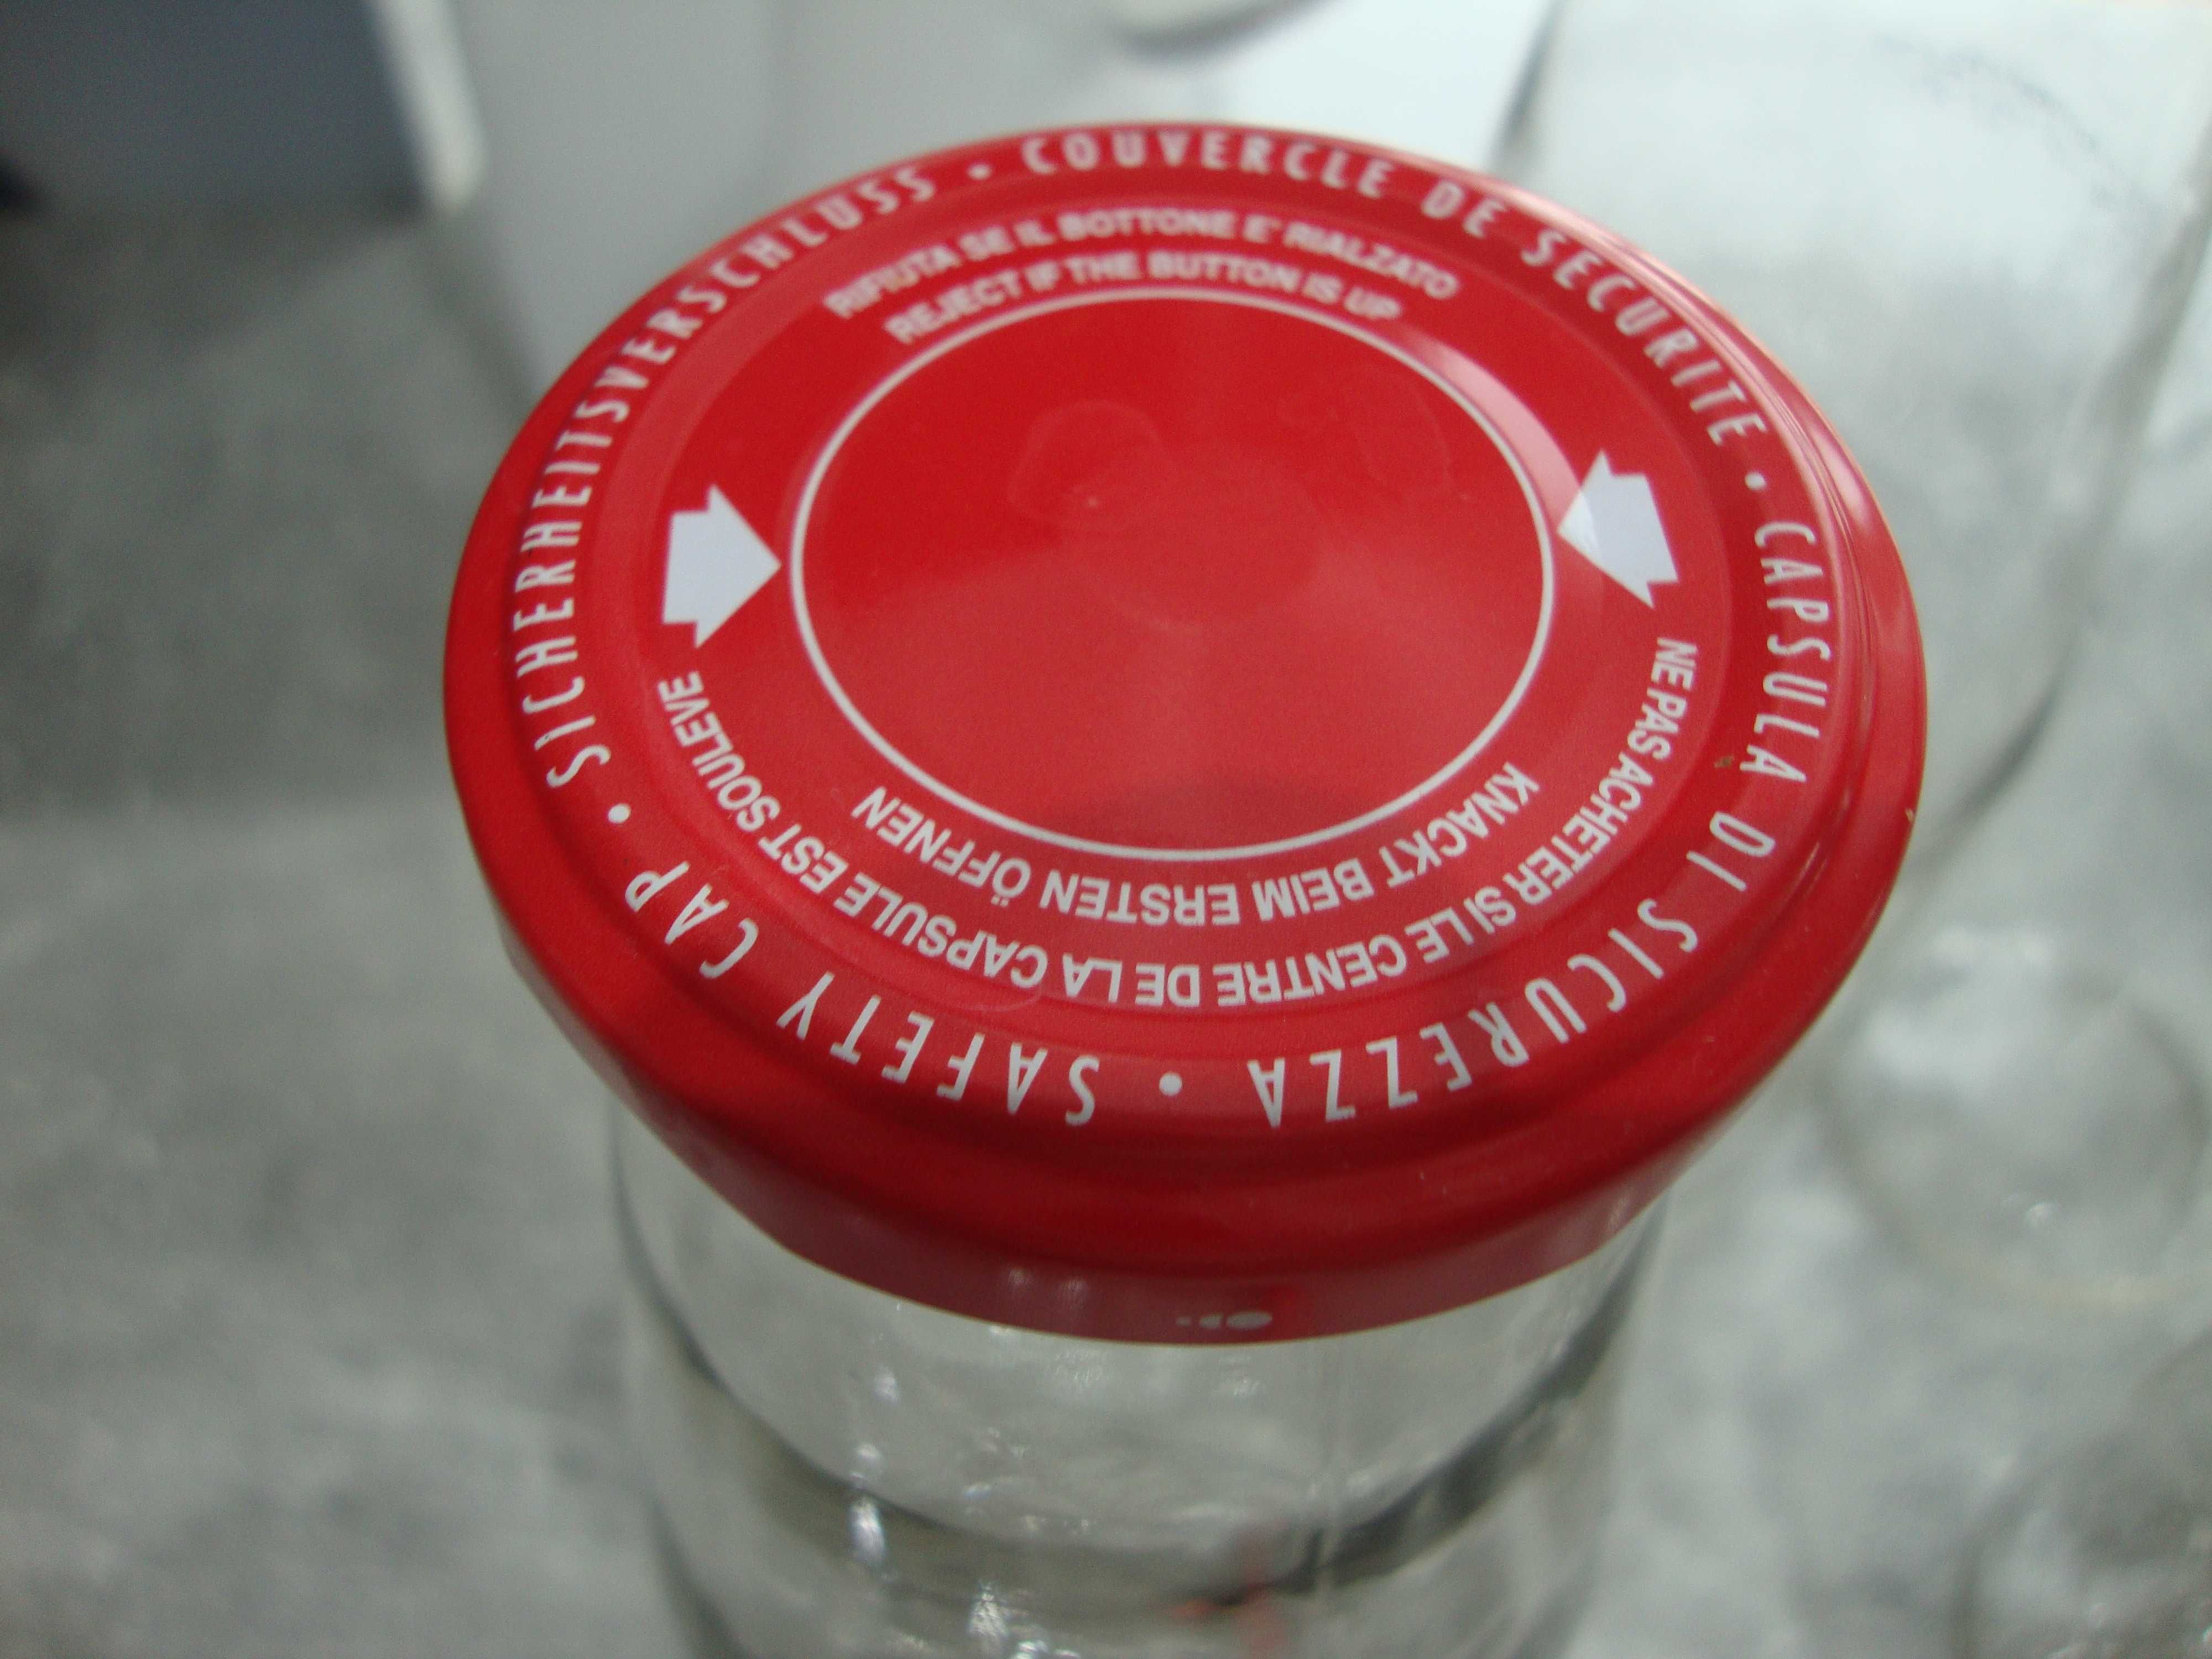 Zestaw 9 sztuk butelka szklana zakrętka metalowa 0,680 gram 0,68 l.